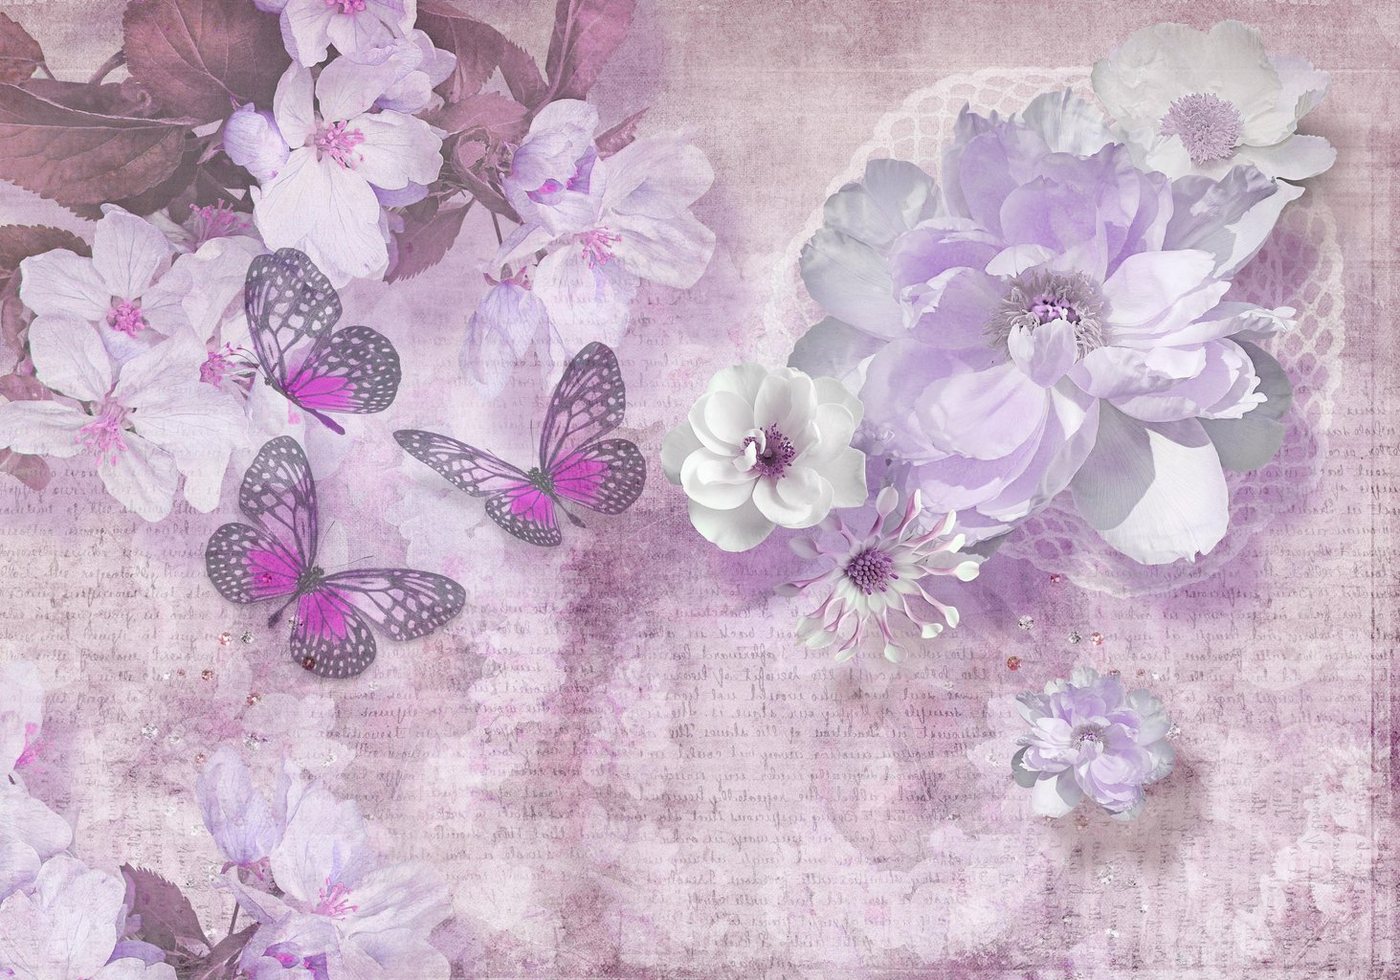 wandmotiv24 Fototapete Blumen Schmetterlinge lila, glatt, Wandtapete, Motivtapete, matt, Vliestapete, selbstklebend von wandmotiv24